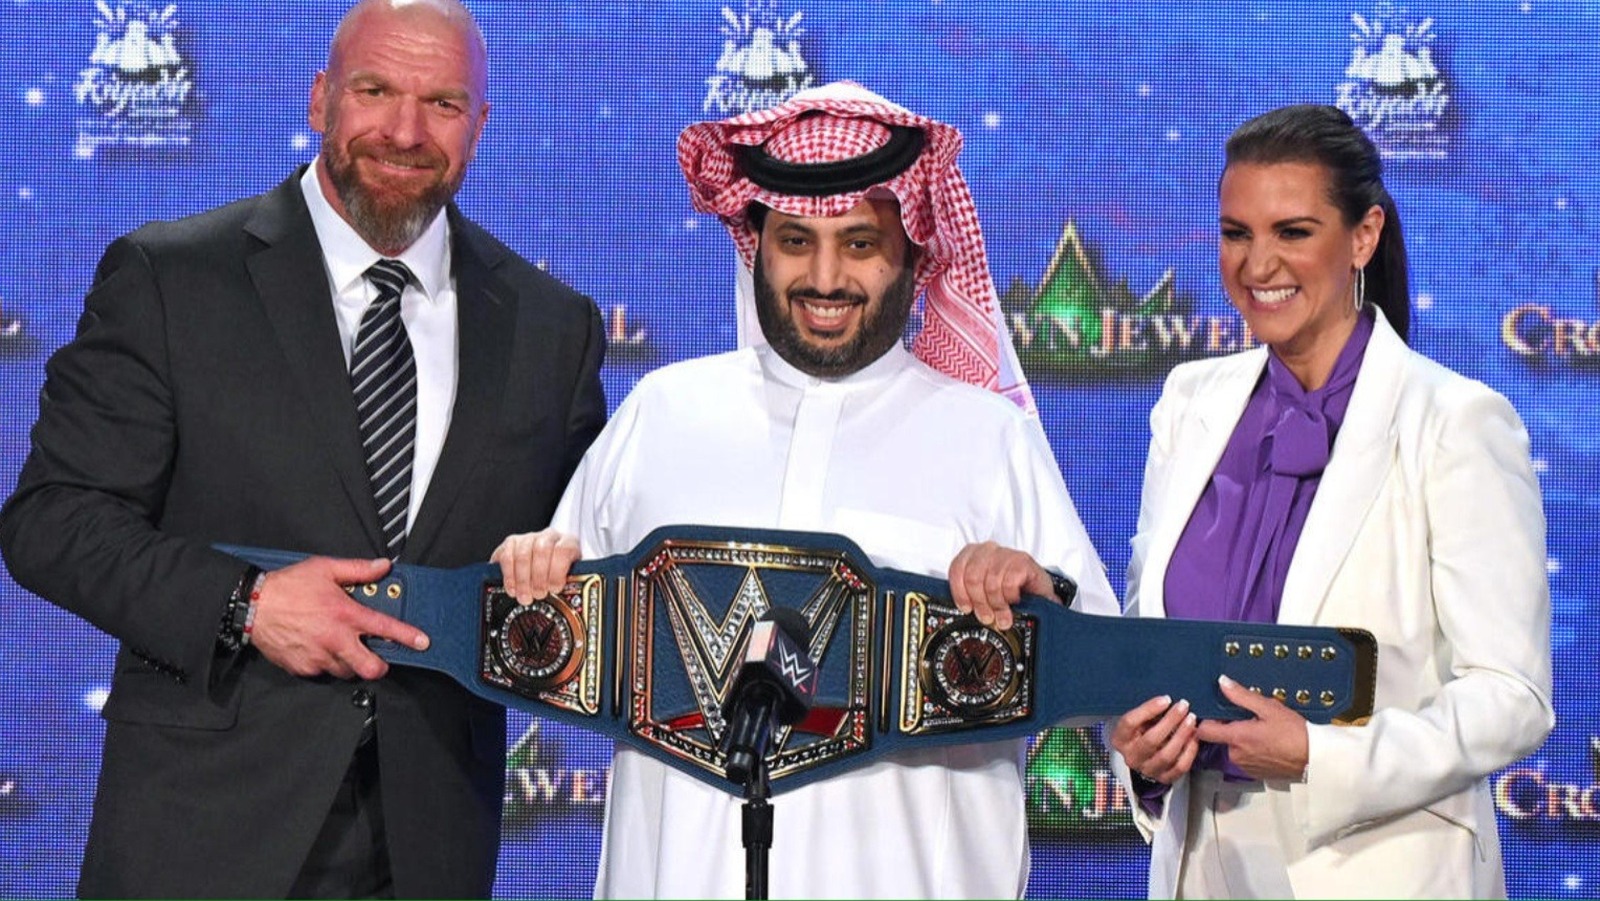 TKO President Mark Shapiro Comments On Possibility Of More WWE Events In Saudi Arabia